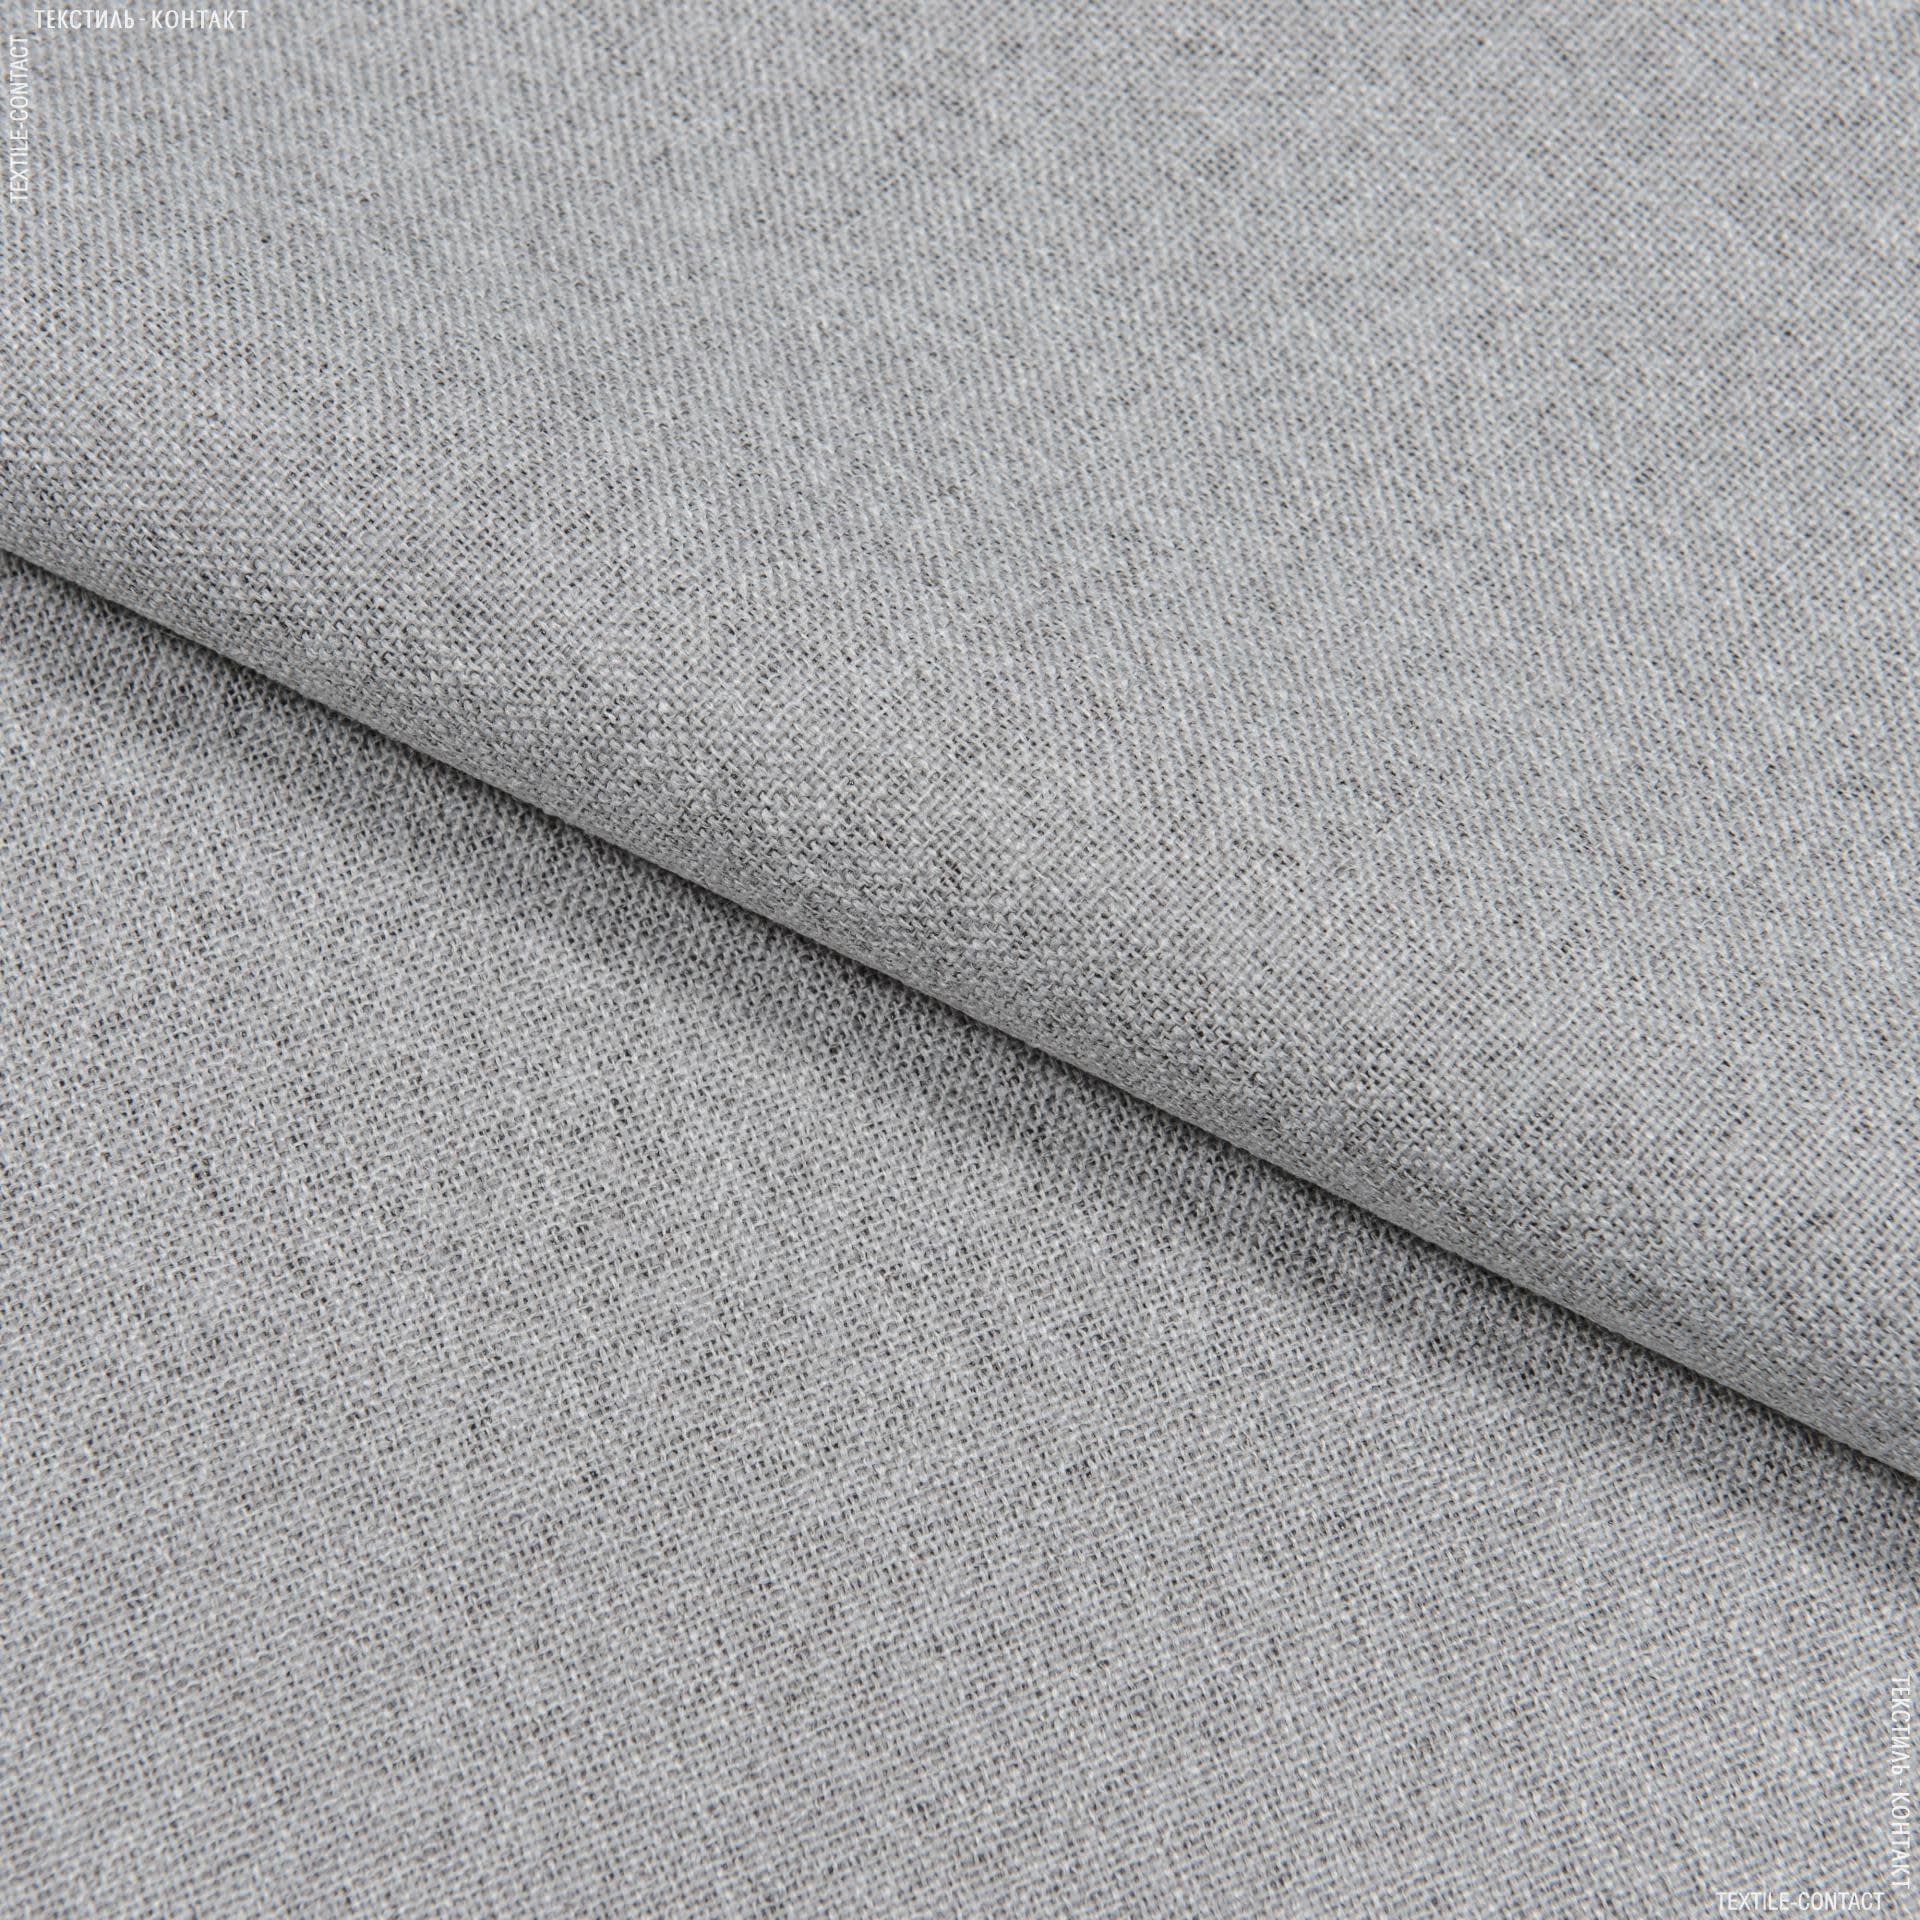 Ткани портьерные ткани - Блекаут меланж Вулли / BLACKOUT WOLLY  серый, бежевый